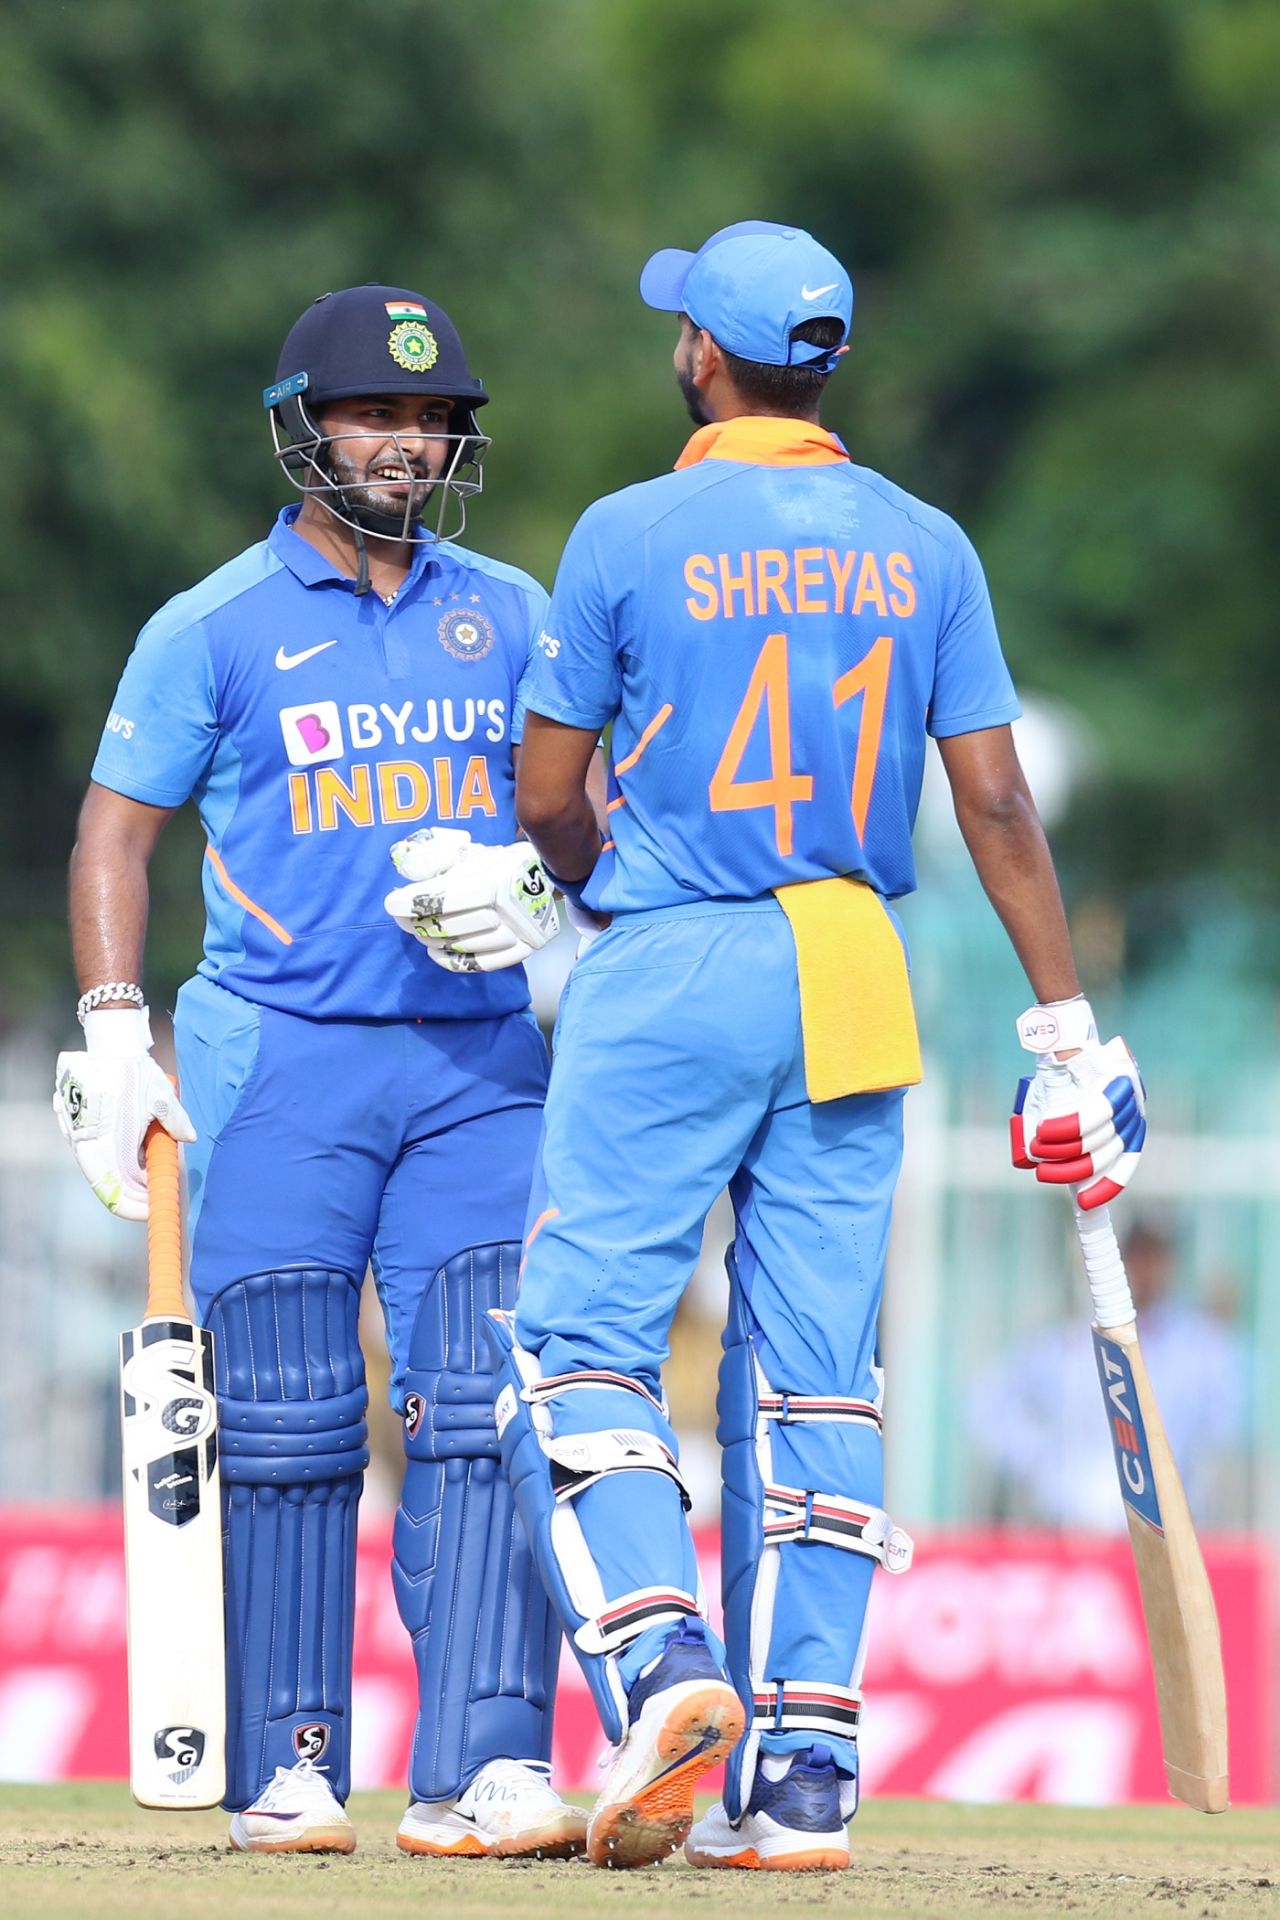 Rishabh Pant and Shreyas Iyer confer mid-pitch, India v West indies, 1st ODI, Chennai, December 15, 2019